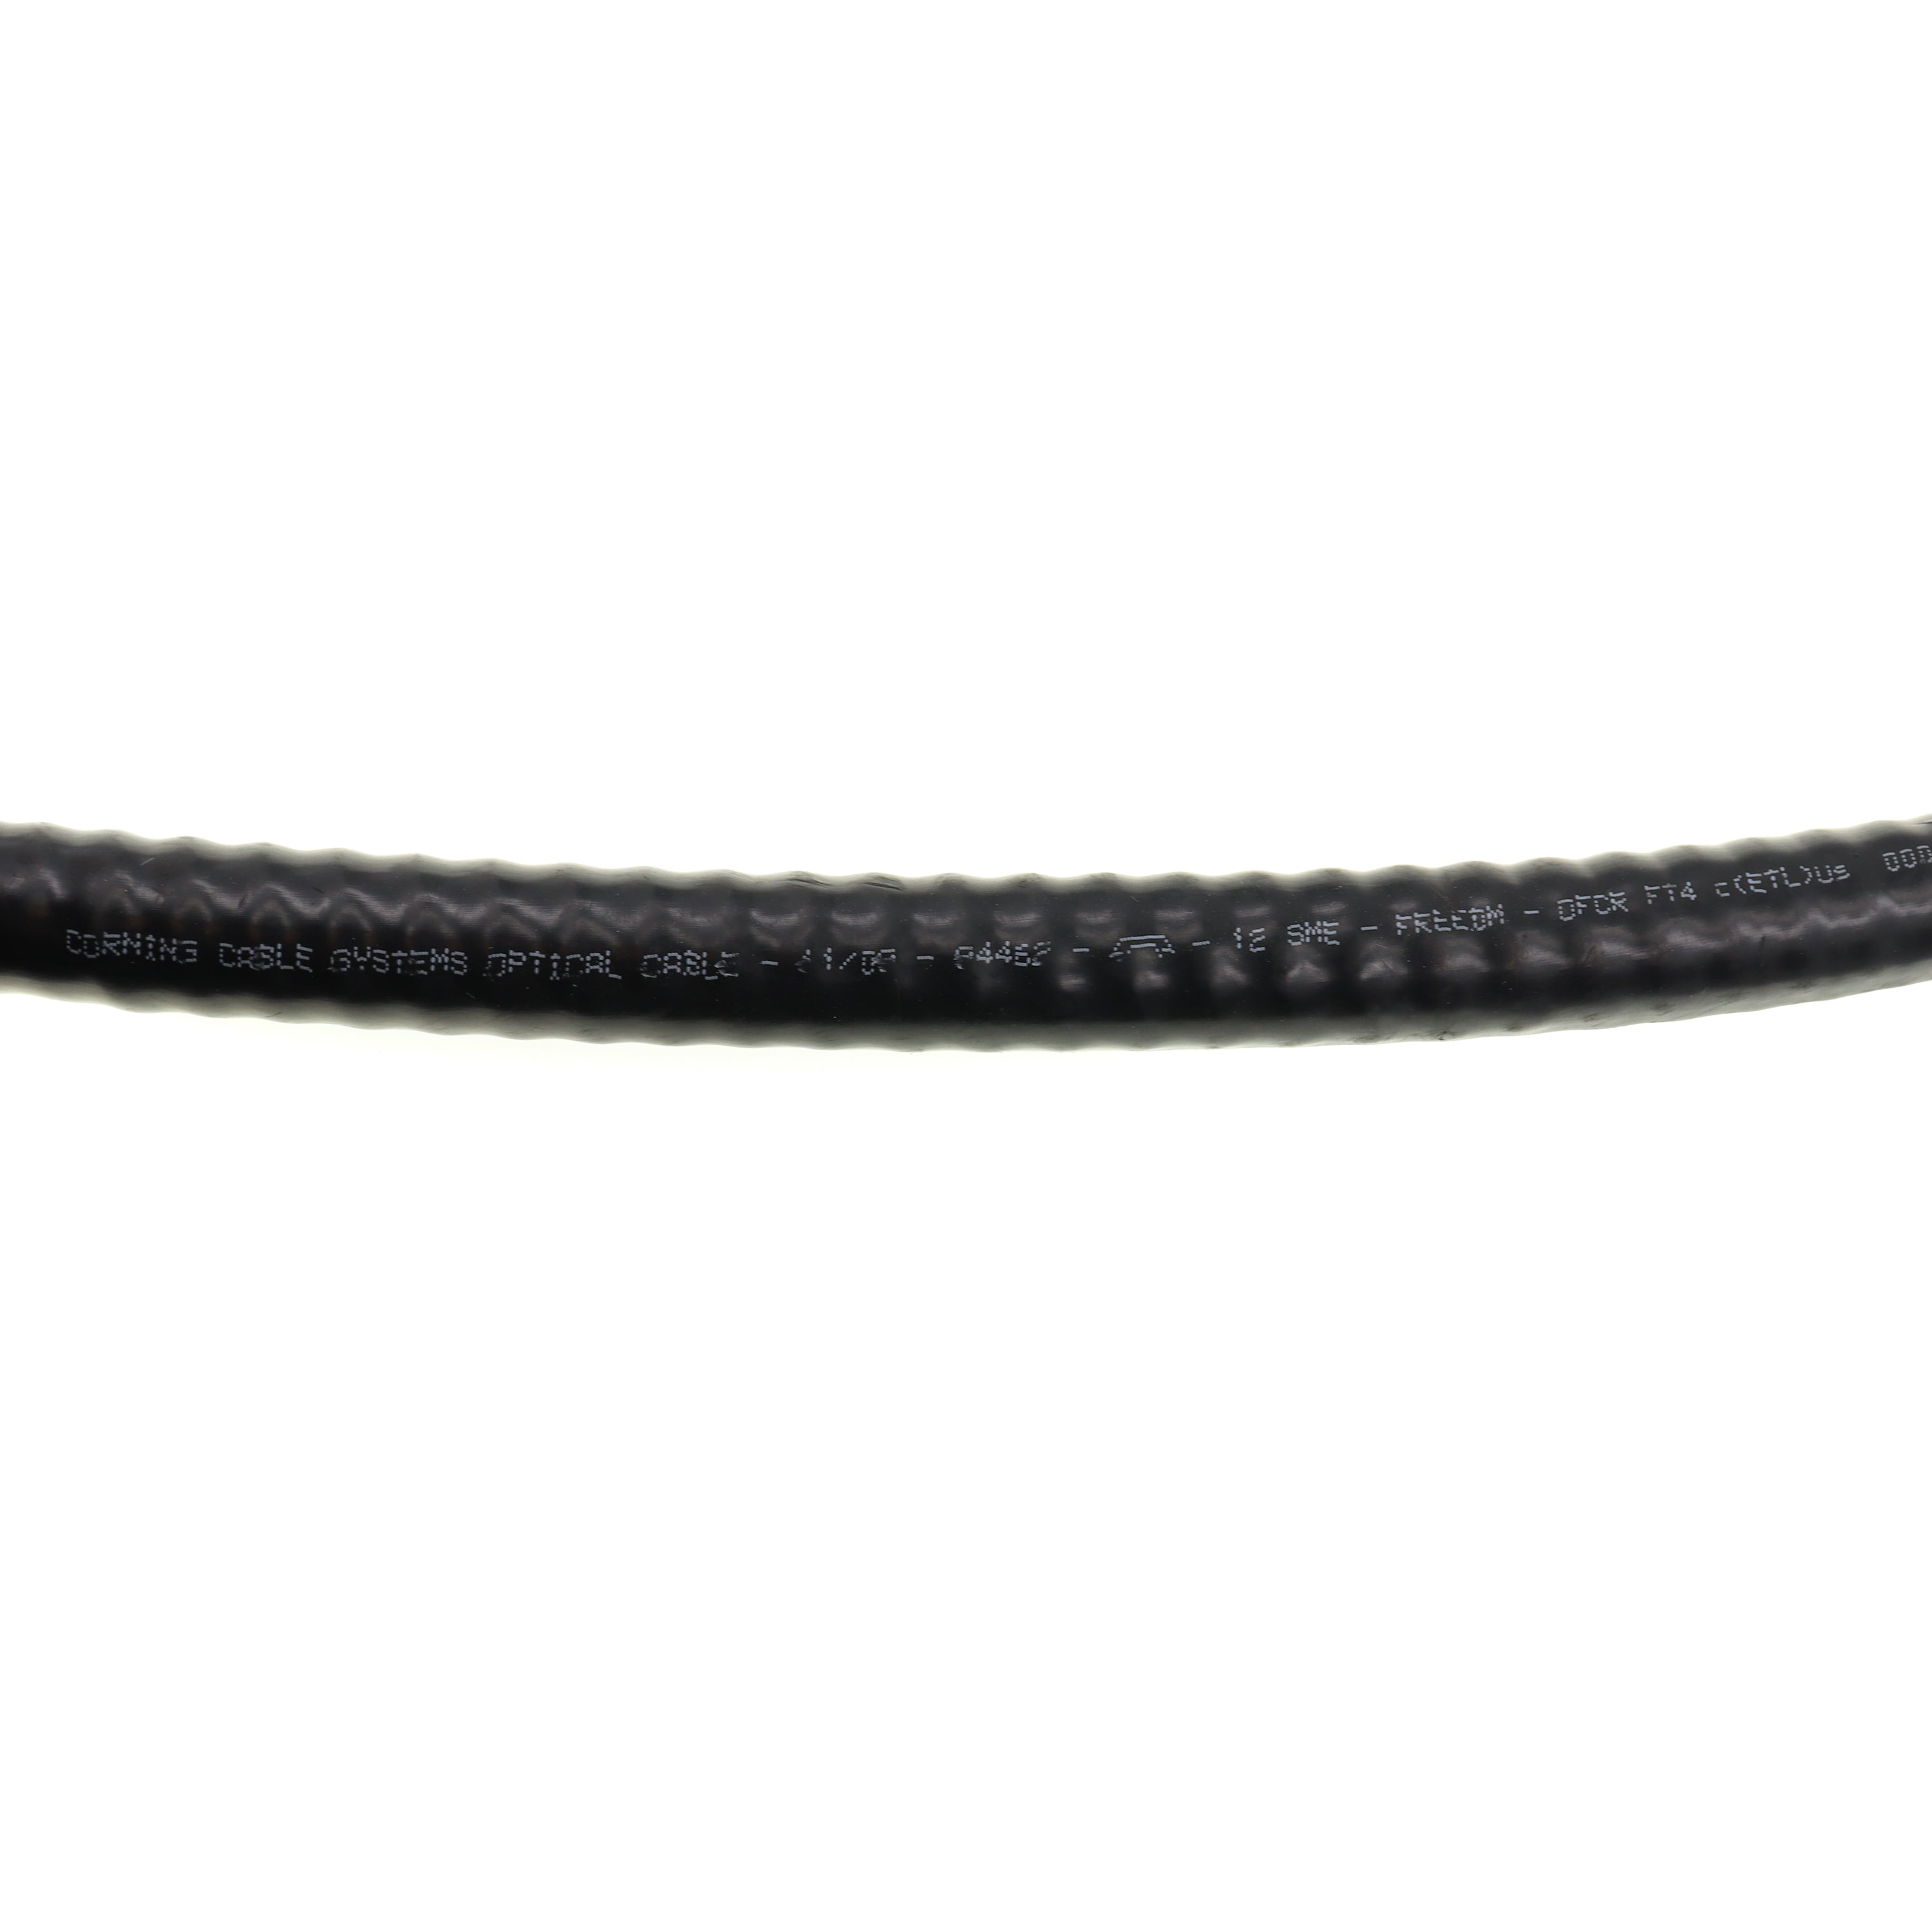 Corning Cable, CORNING 012EWF-T4101DA1 INDOOR/OUTDOOR ARMOR LT FIBER, OFNR, 12F, 2700-FEET